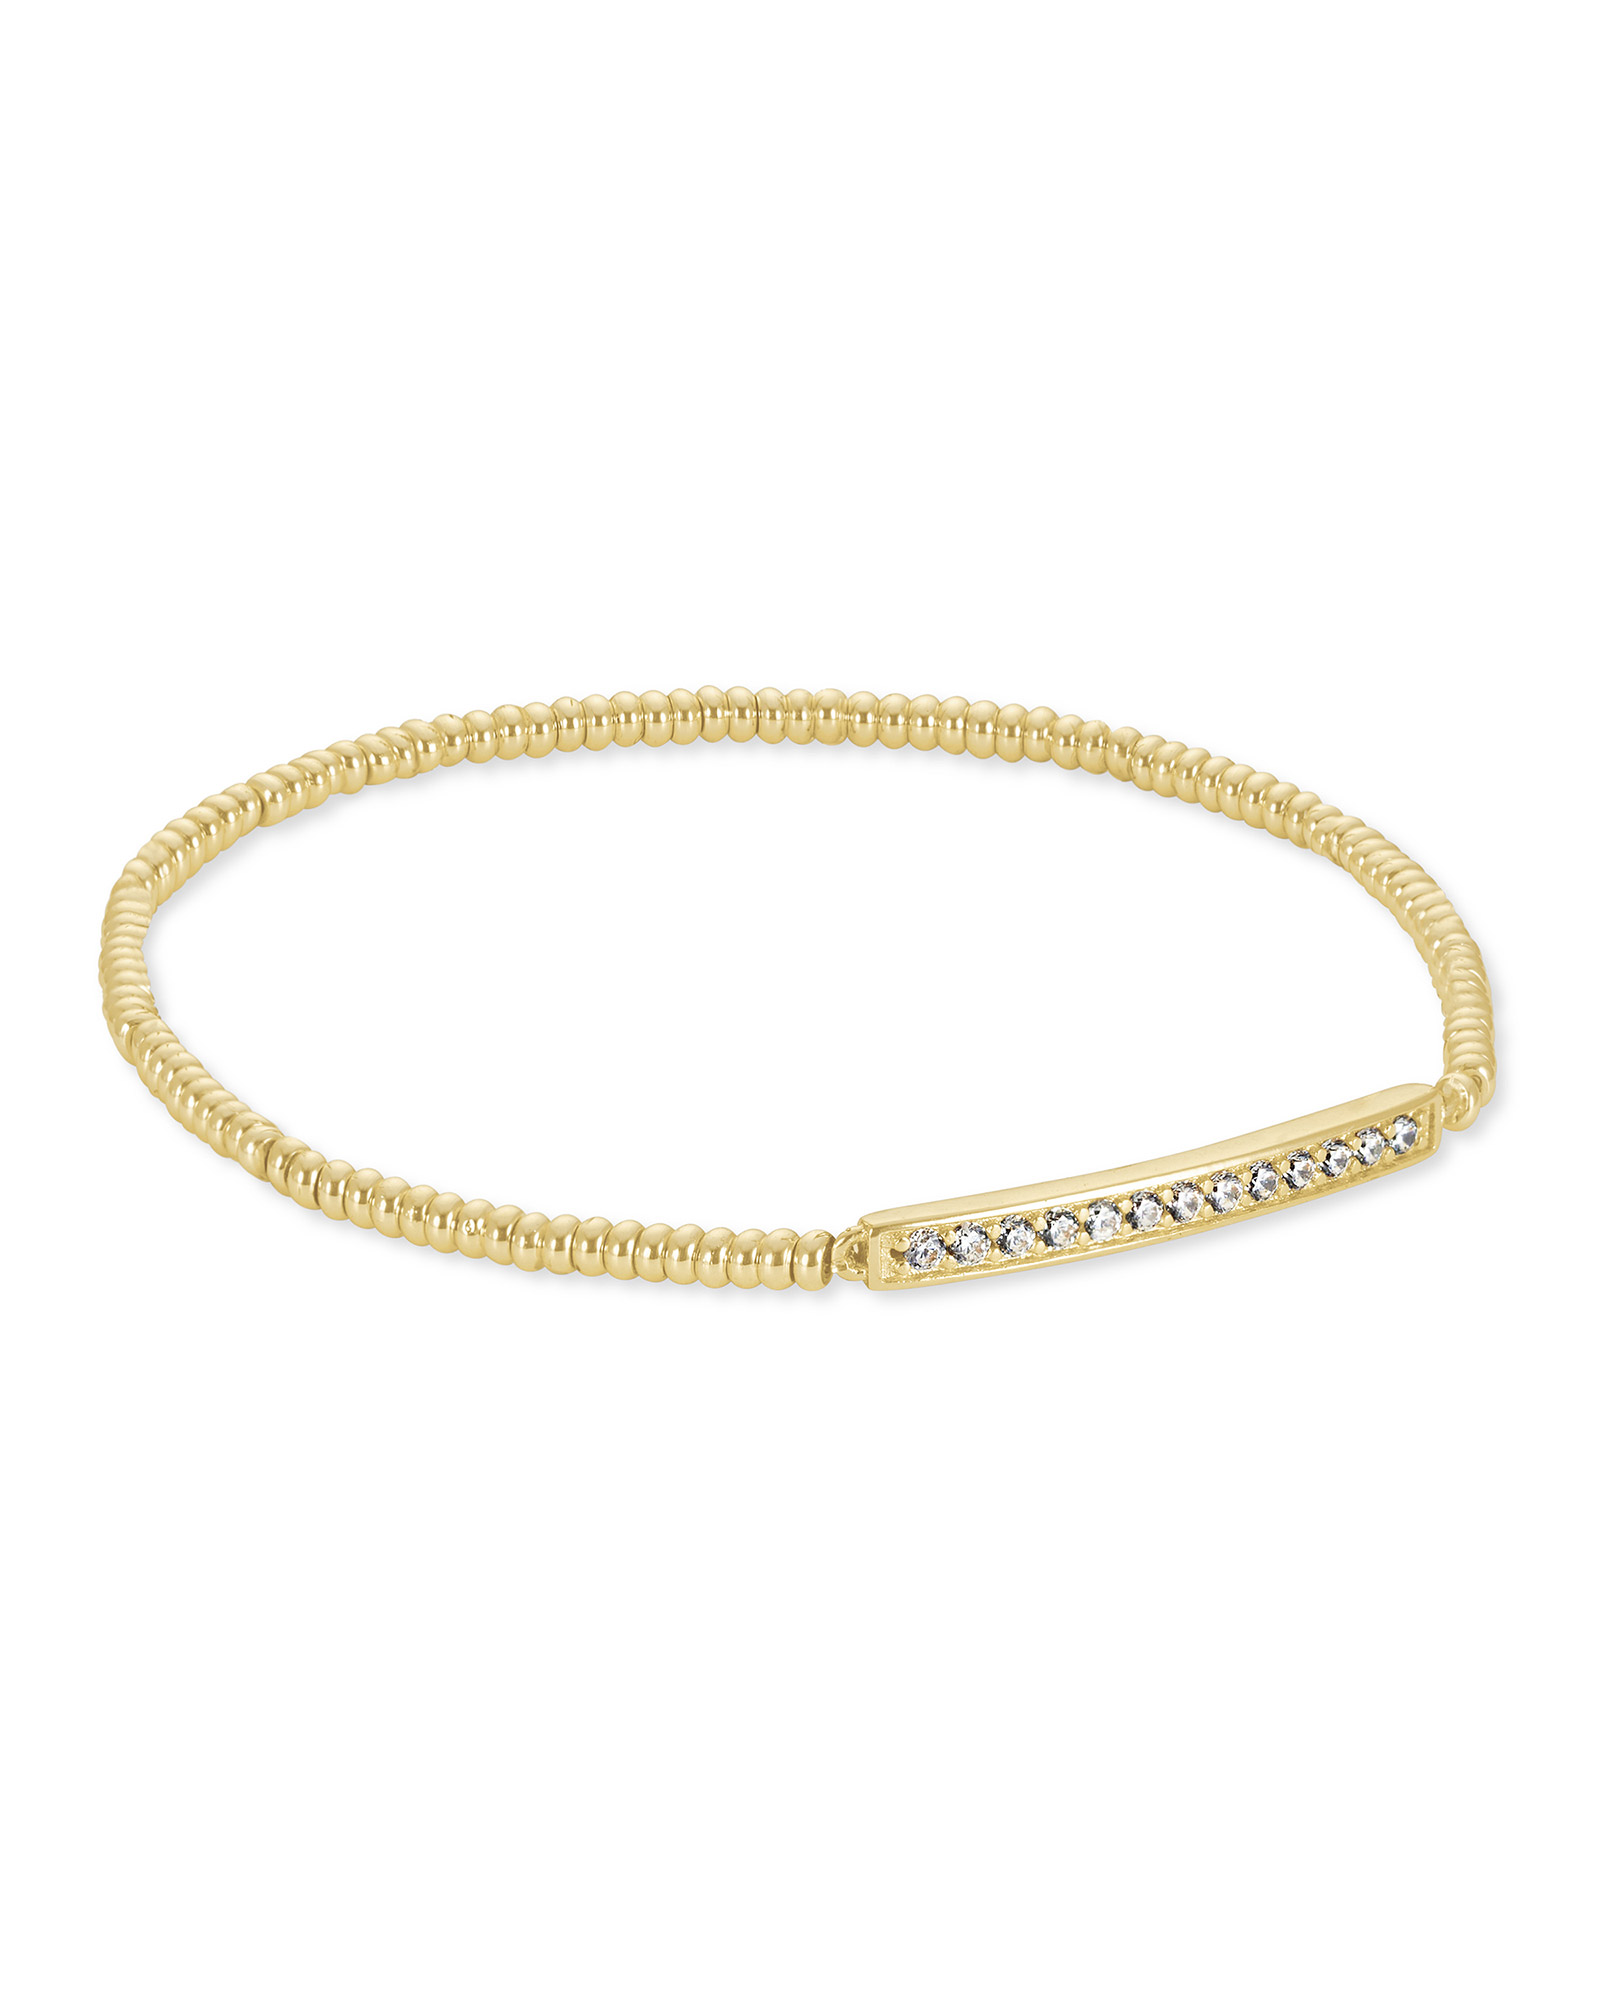 Buy fzbali 3 Pcs Gold Beaded Bracelets, Men Women Elastic Copper Beads  Balls Stretch Bracelet Anklet, Fashion Stacking Bracelets Cuff Set Jewelry  for Men Women at Amazon.in